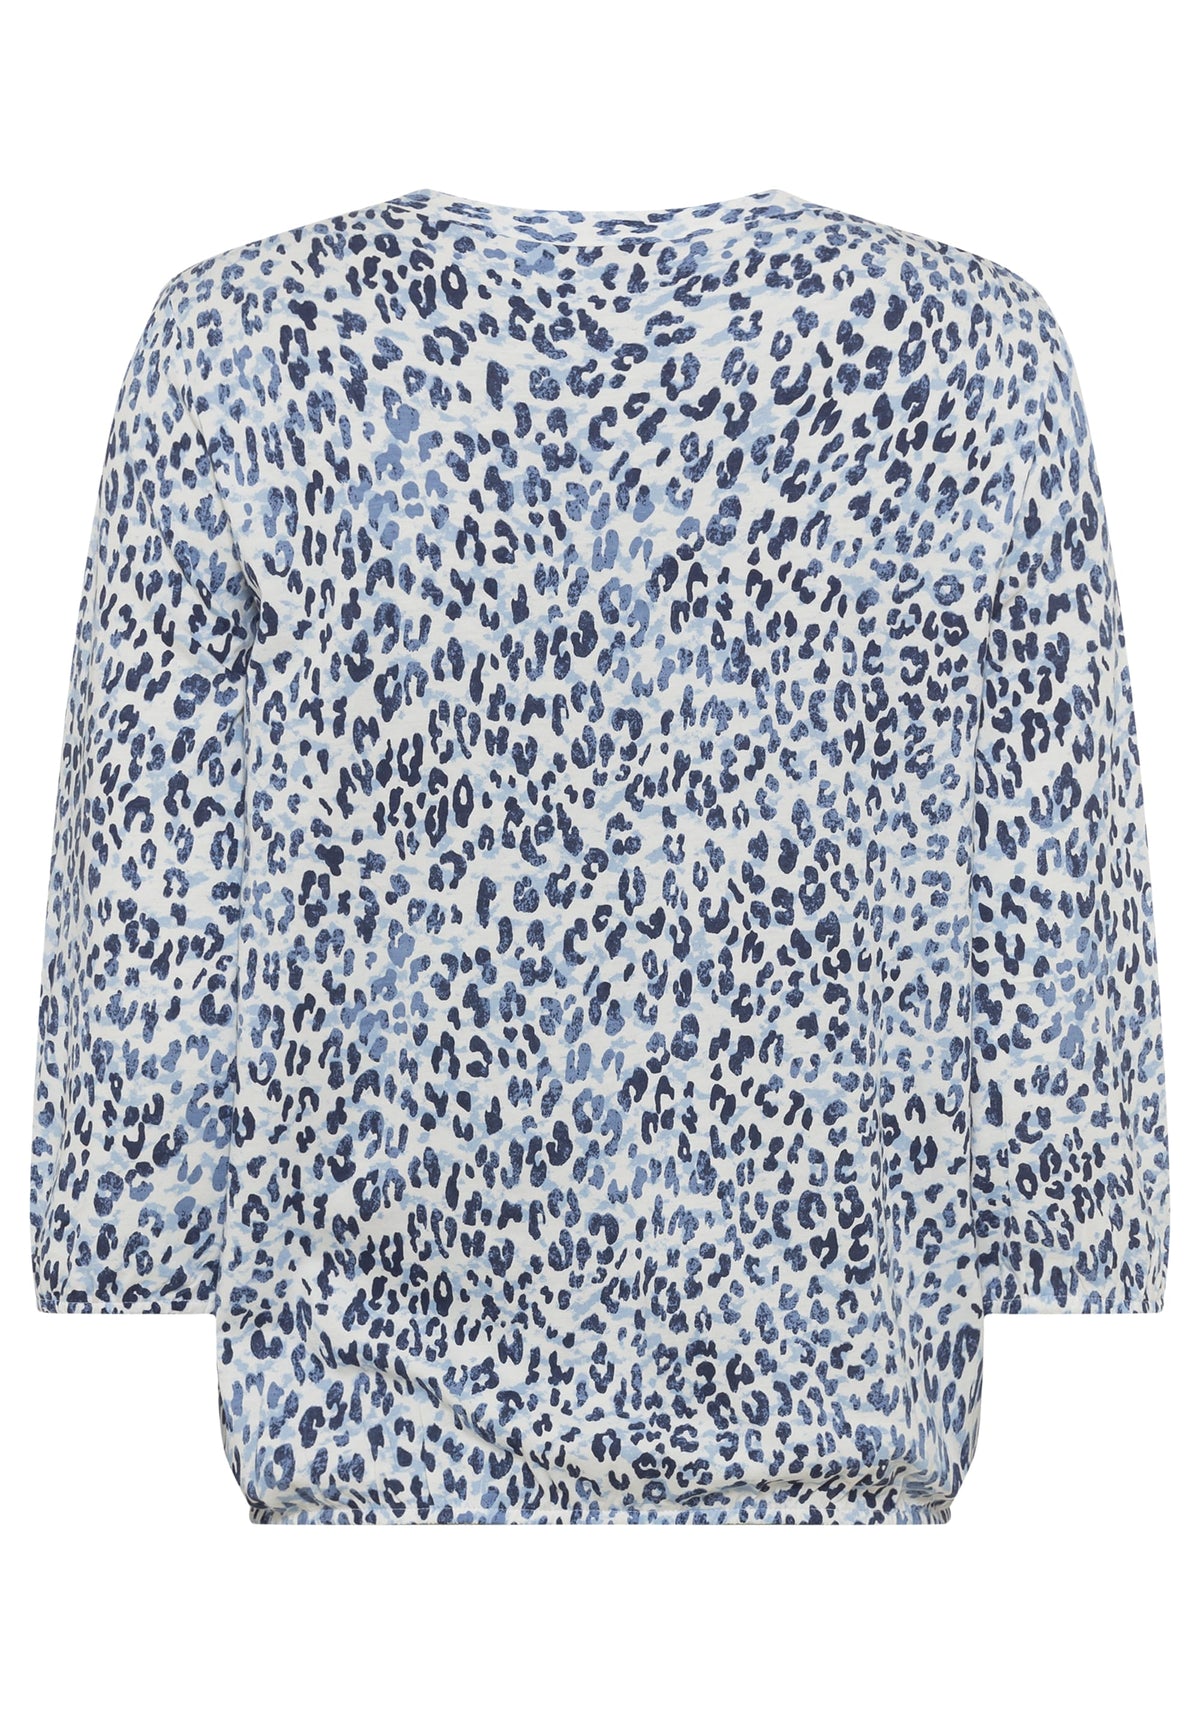 Cotton Blend 3/4 Sleeve Leopard Print Tunic T-Shirt containing TENCEL™ Modal